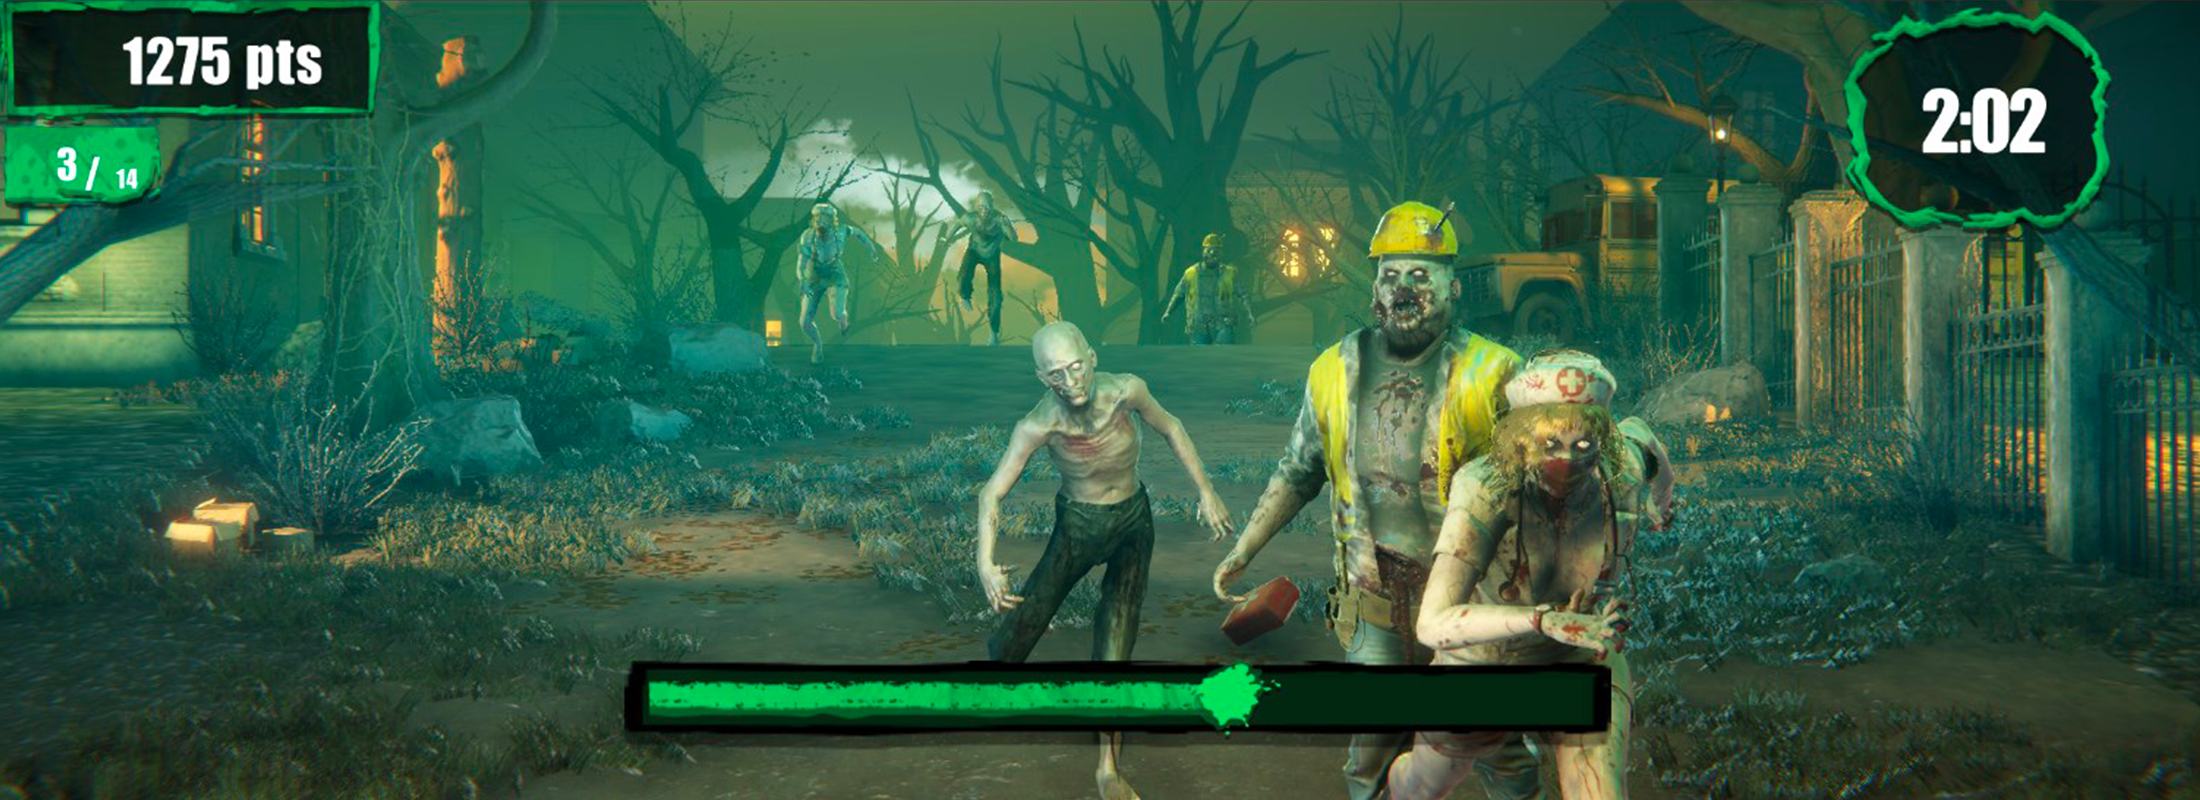 Zombies gameplay image